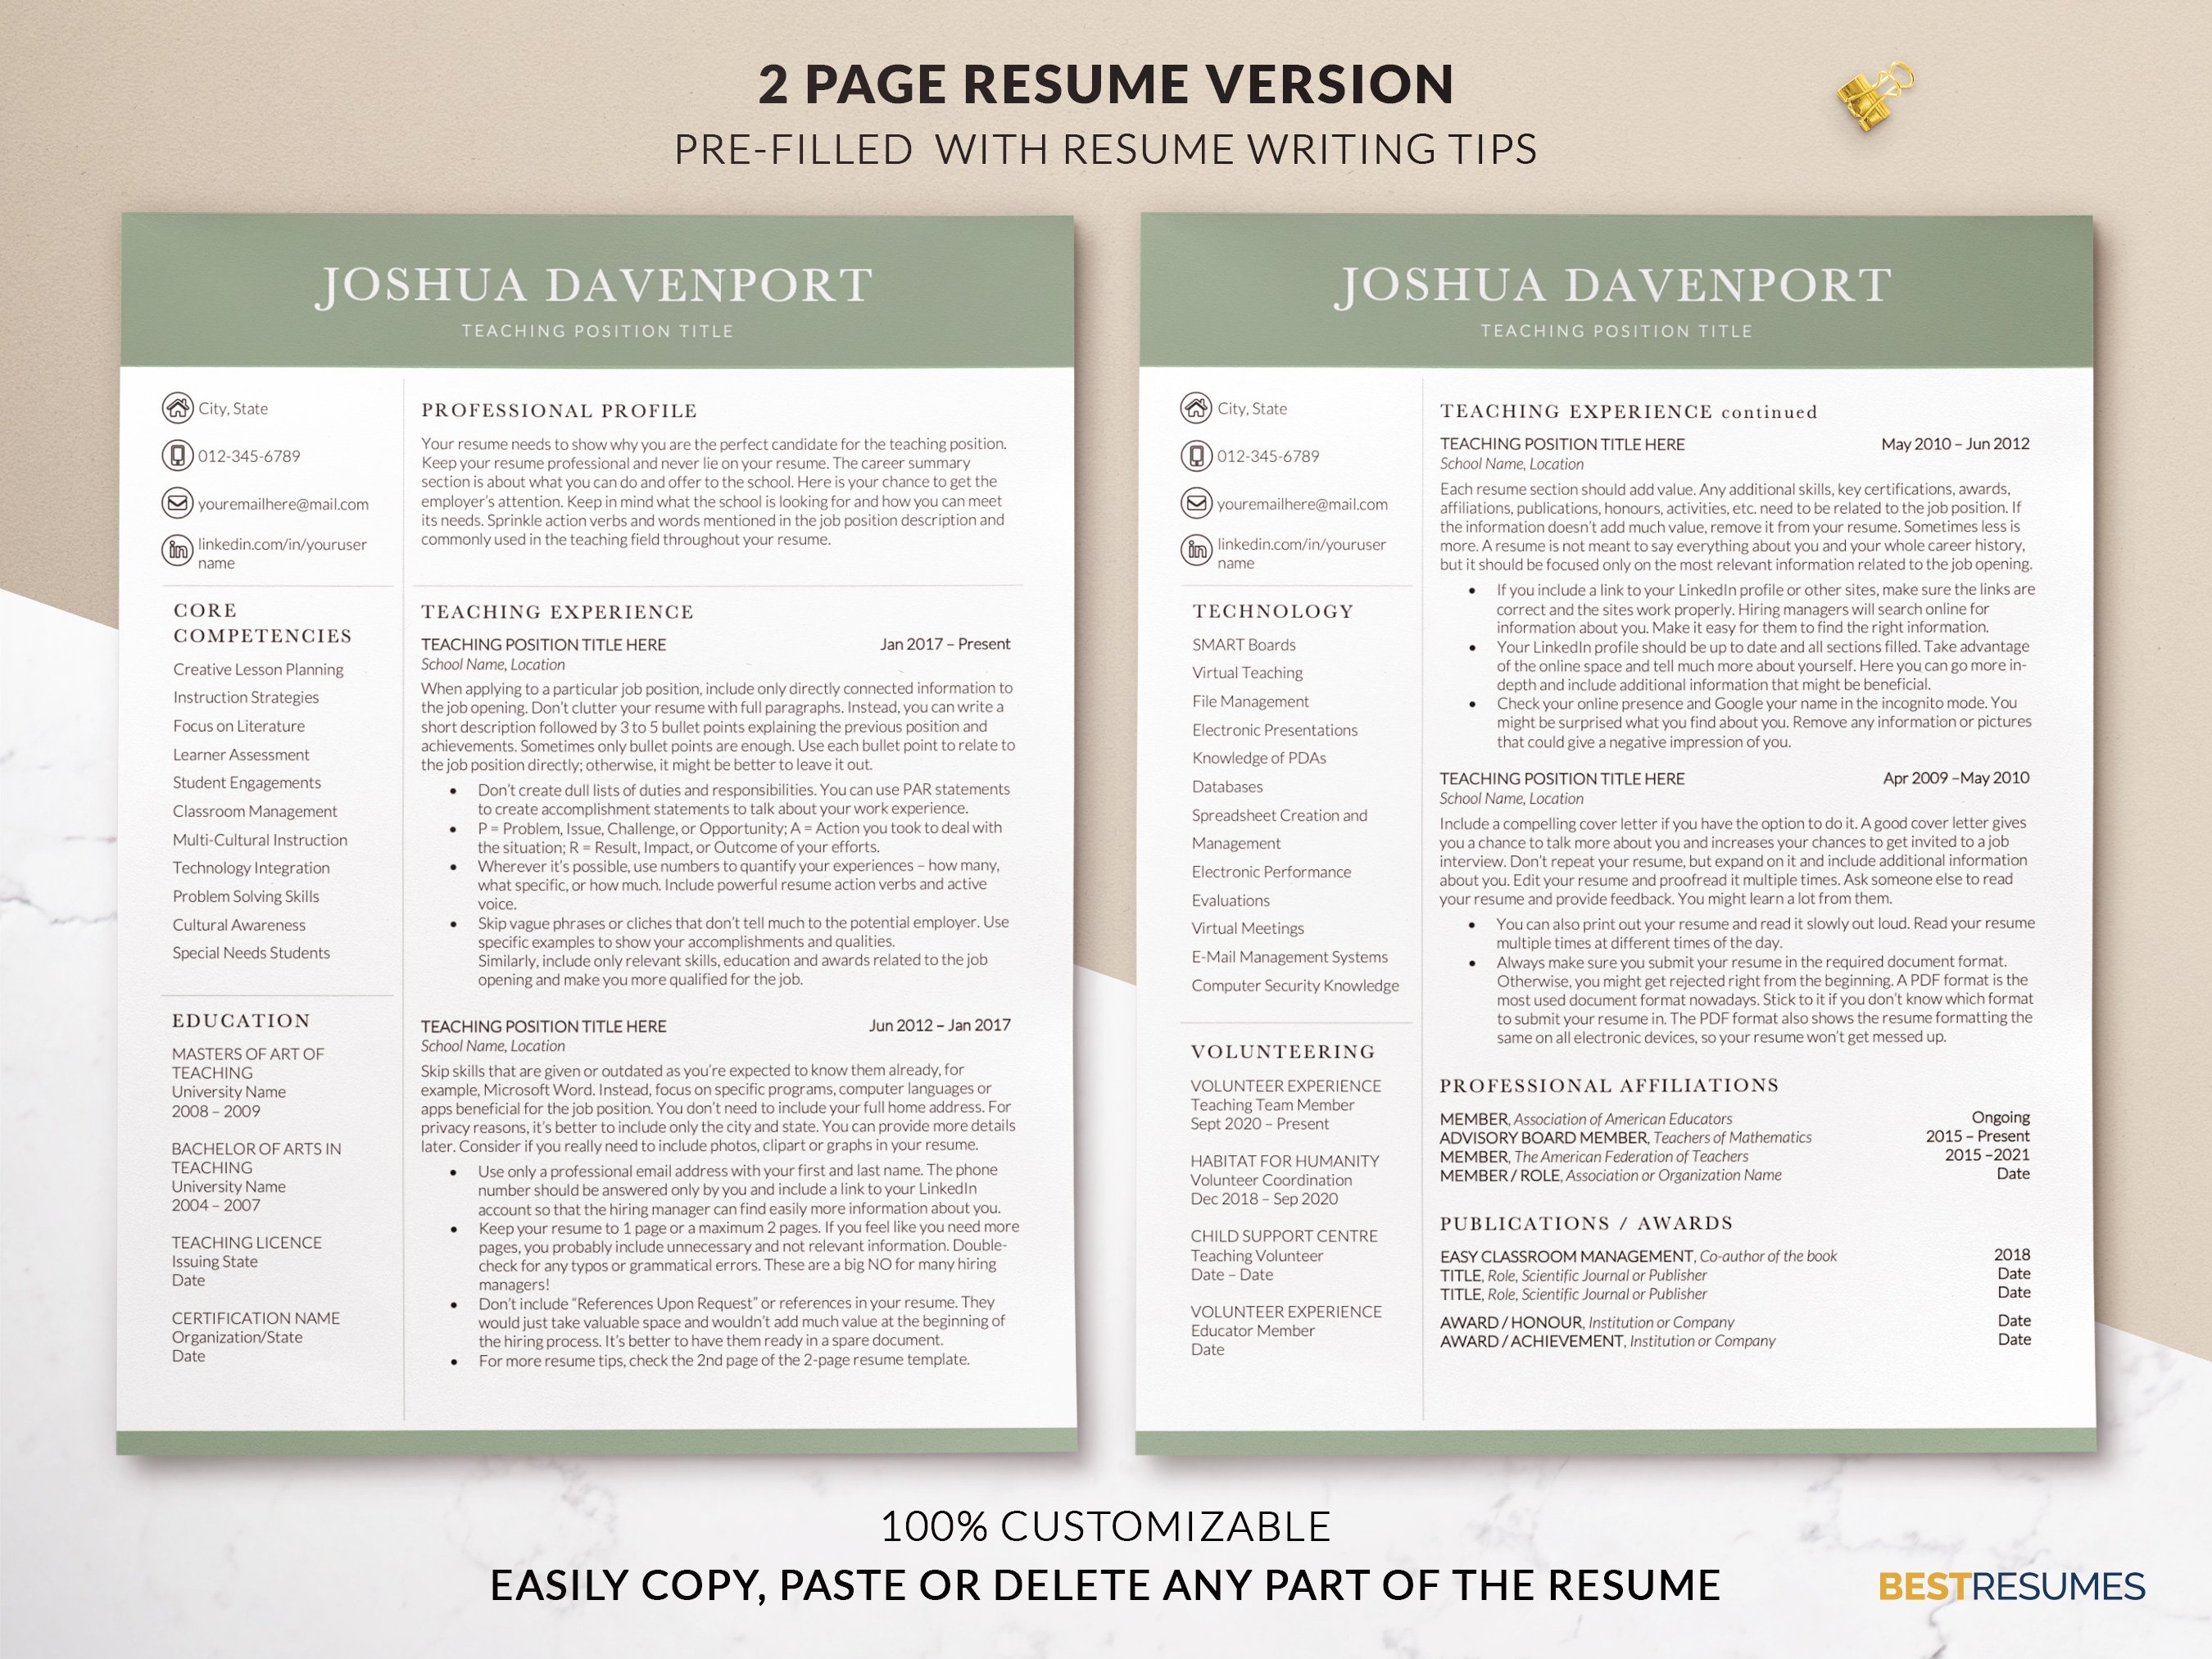 professional resume for teachers template two page resume joshua davenport 630